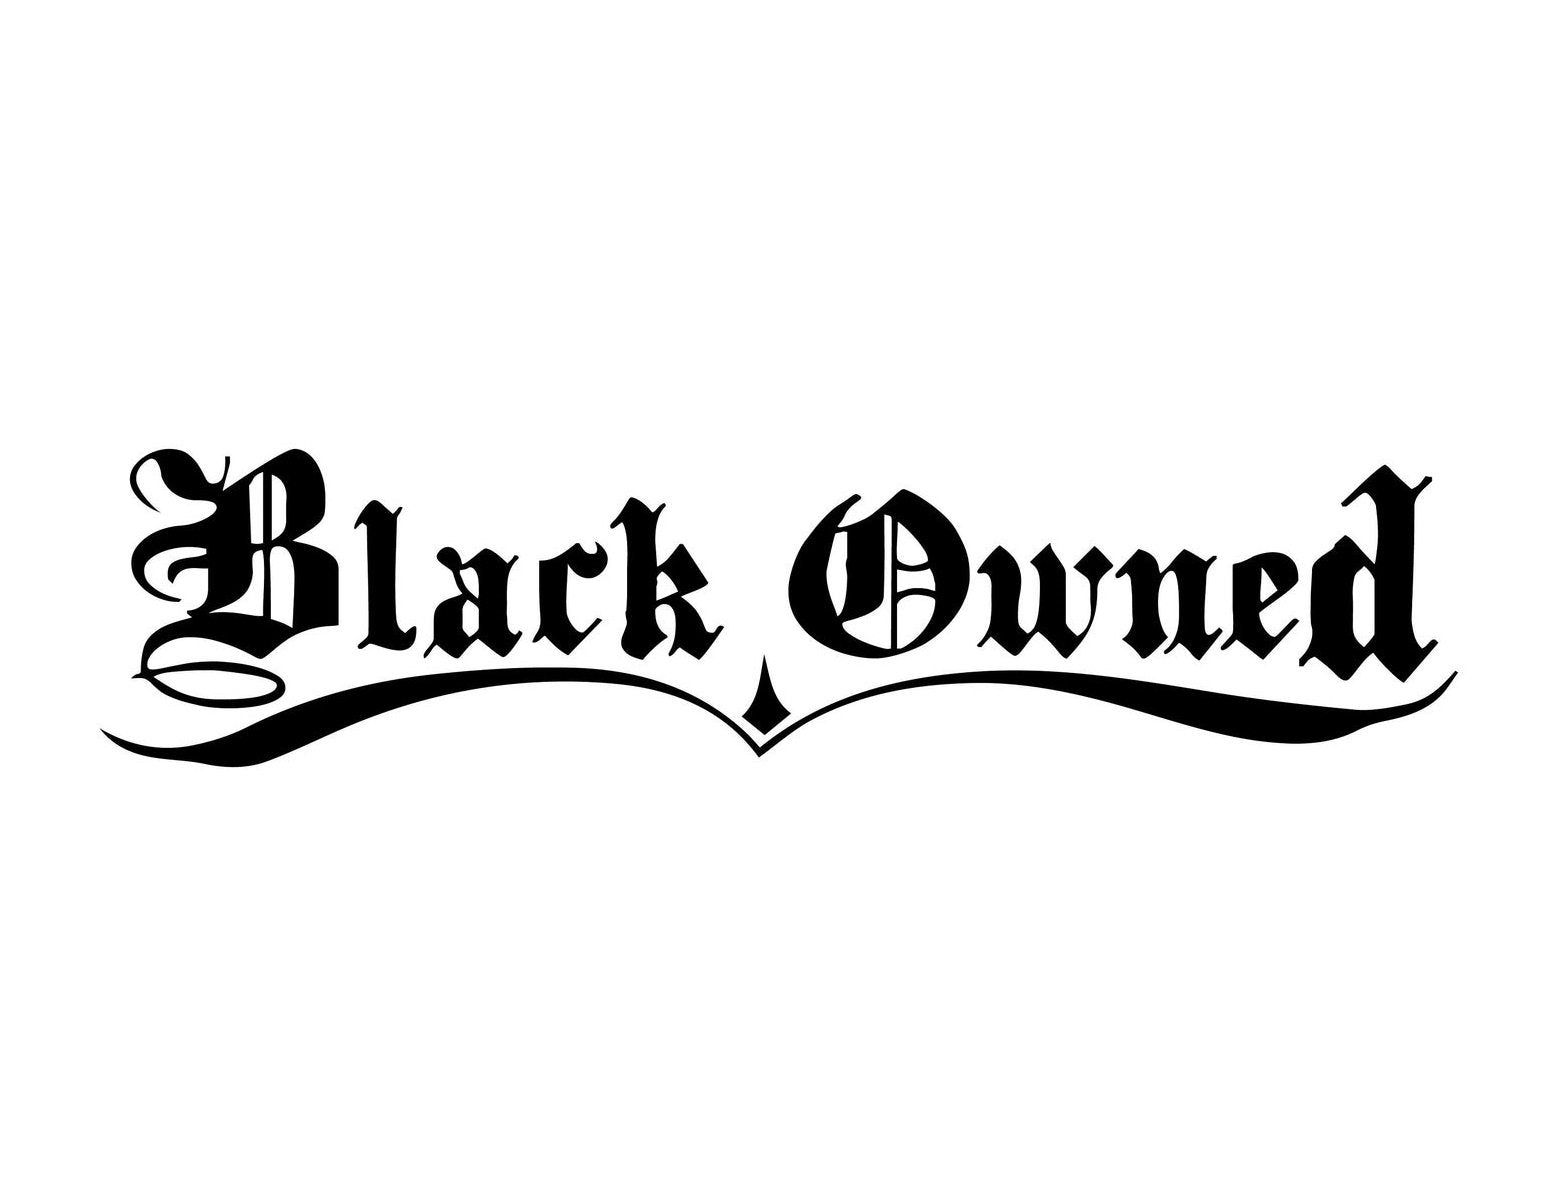 black owned white slut wife tattoo